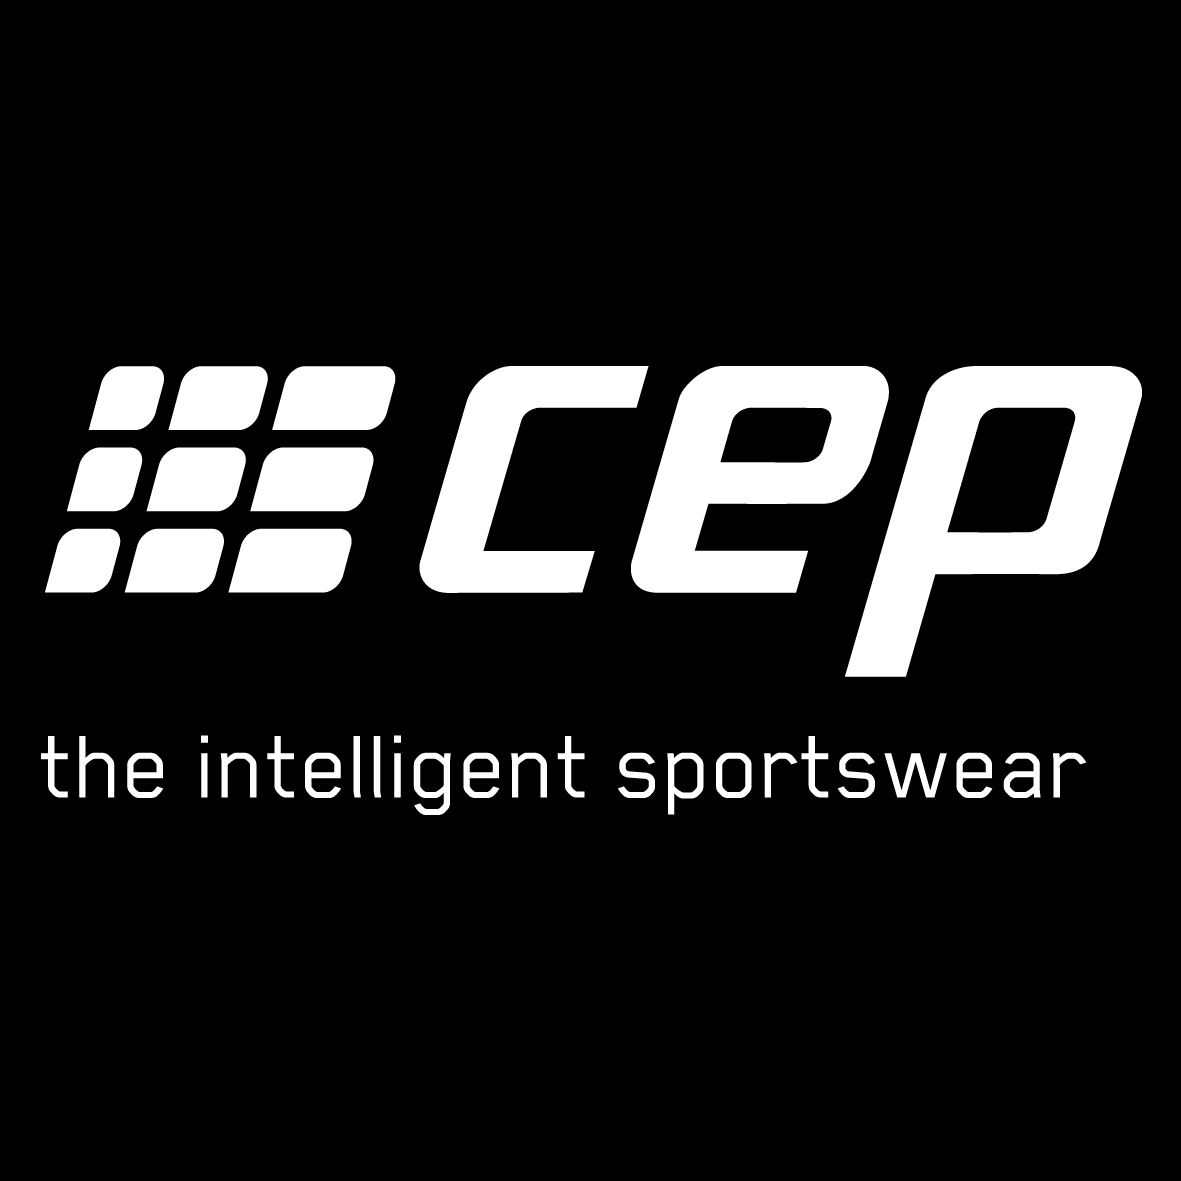 cep_logo